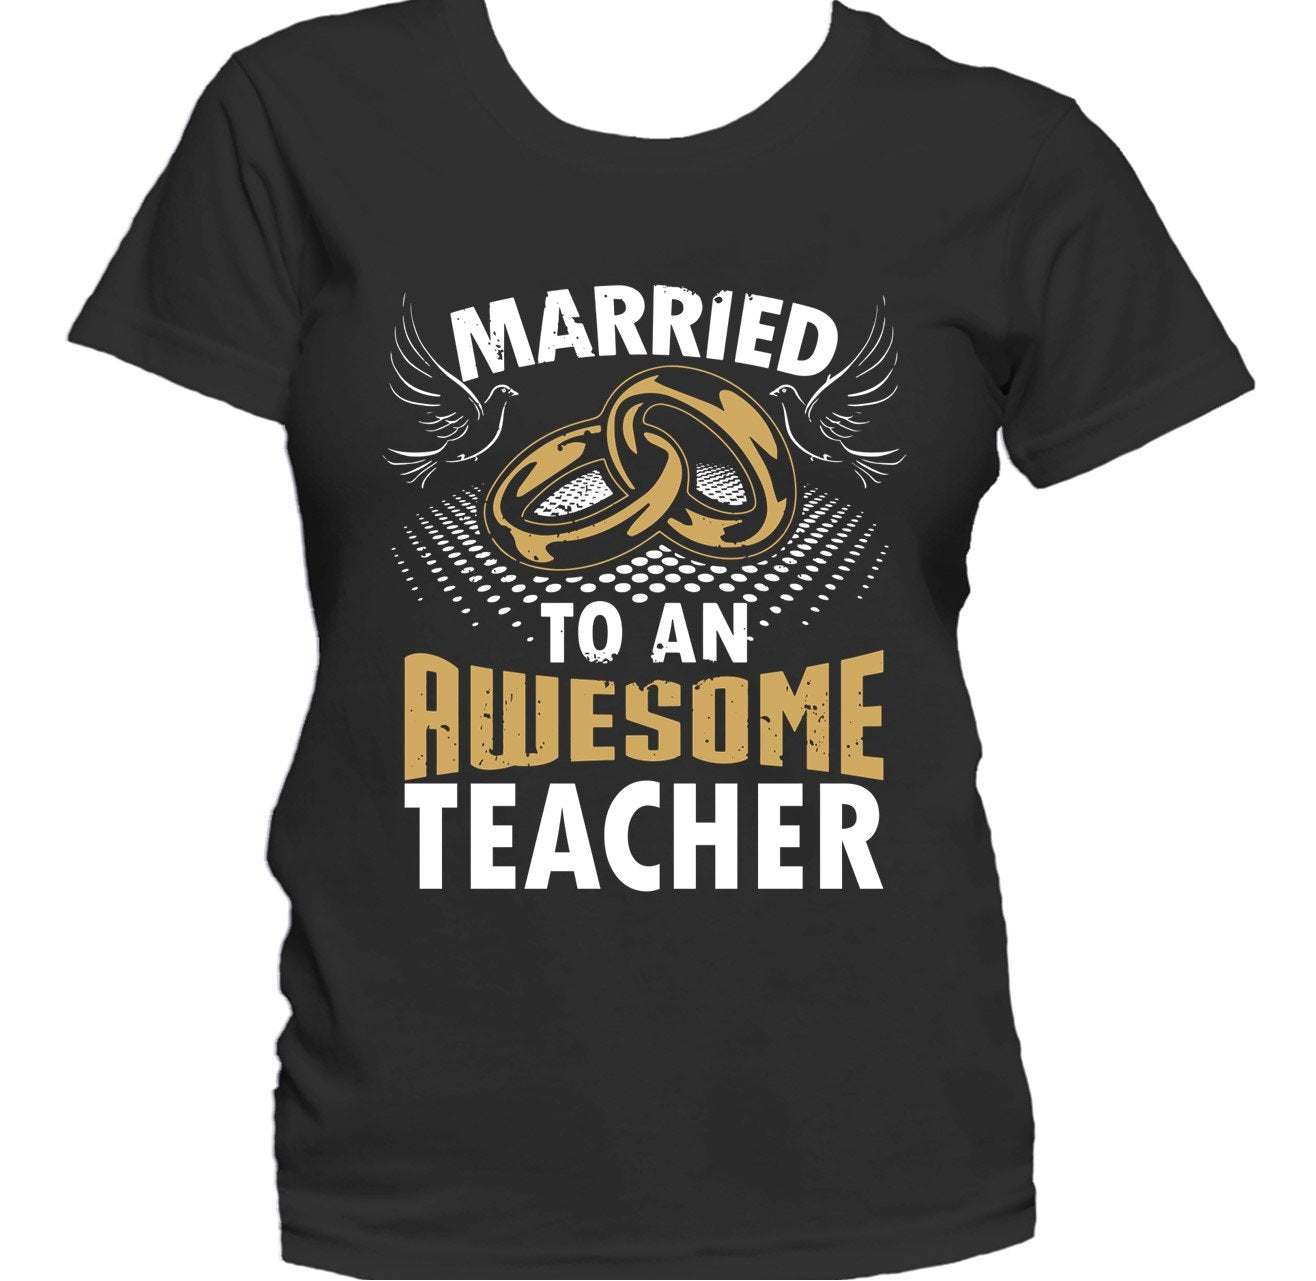 Married To An Awesome Teacher Women's T-Shirt